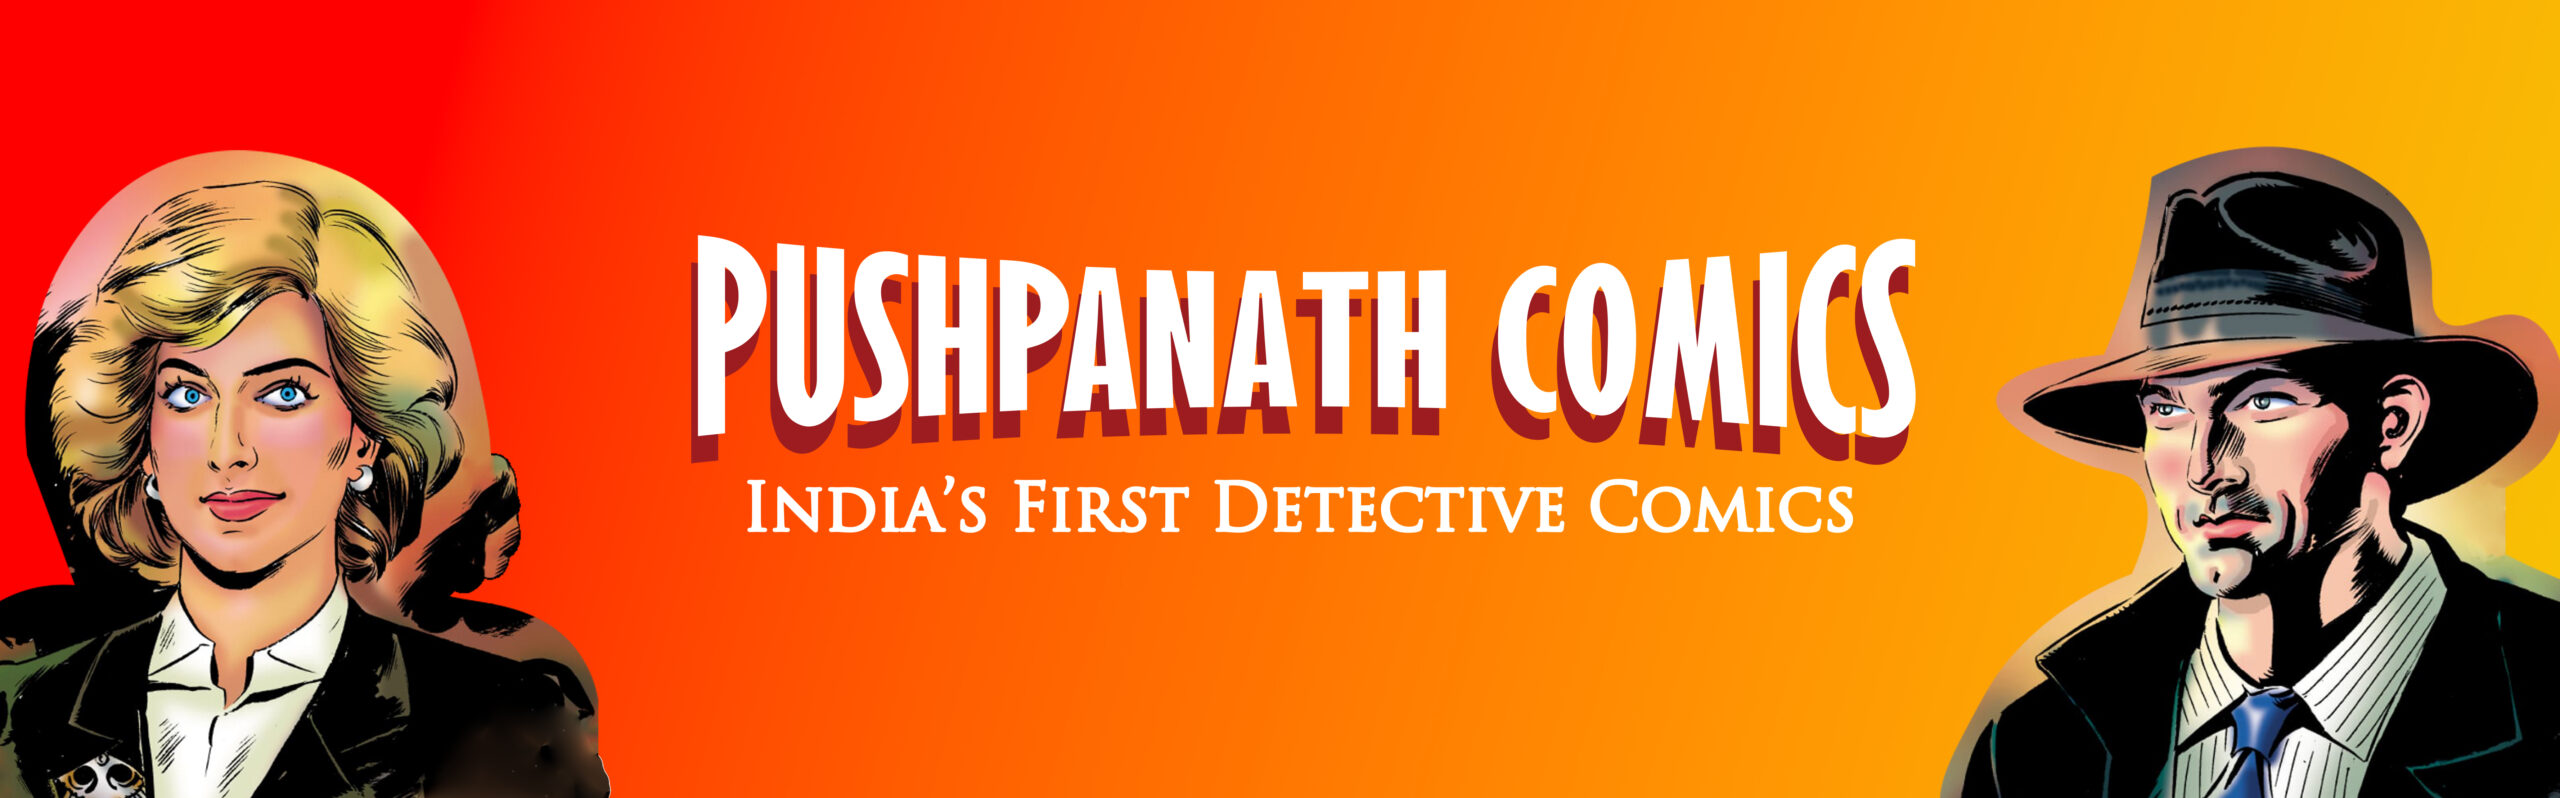 pushpanath comics banner